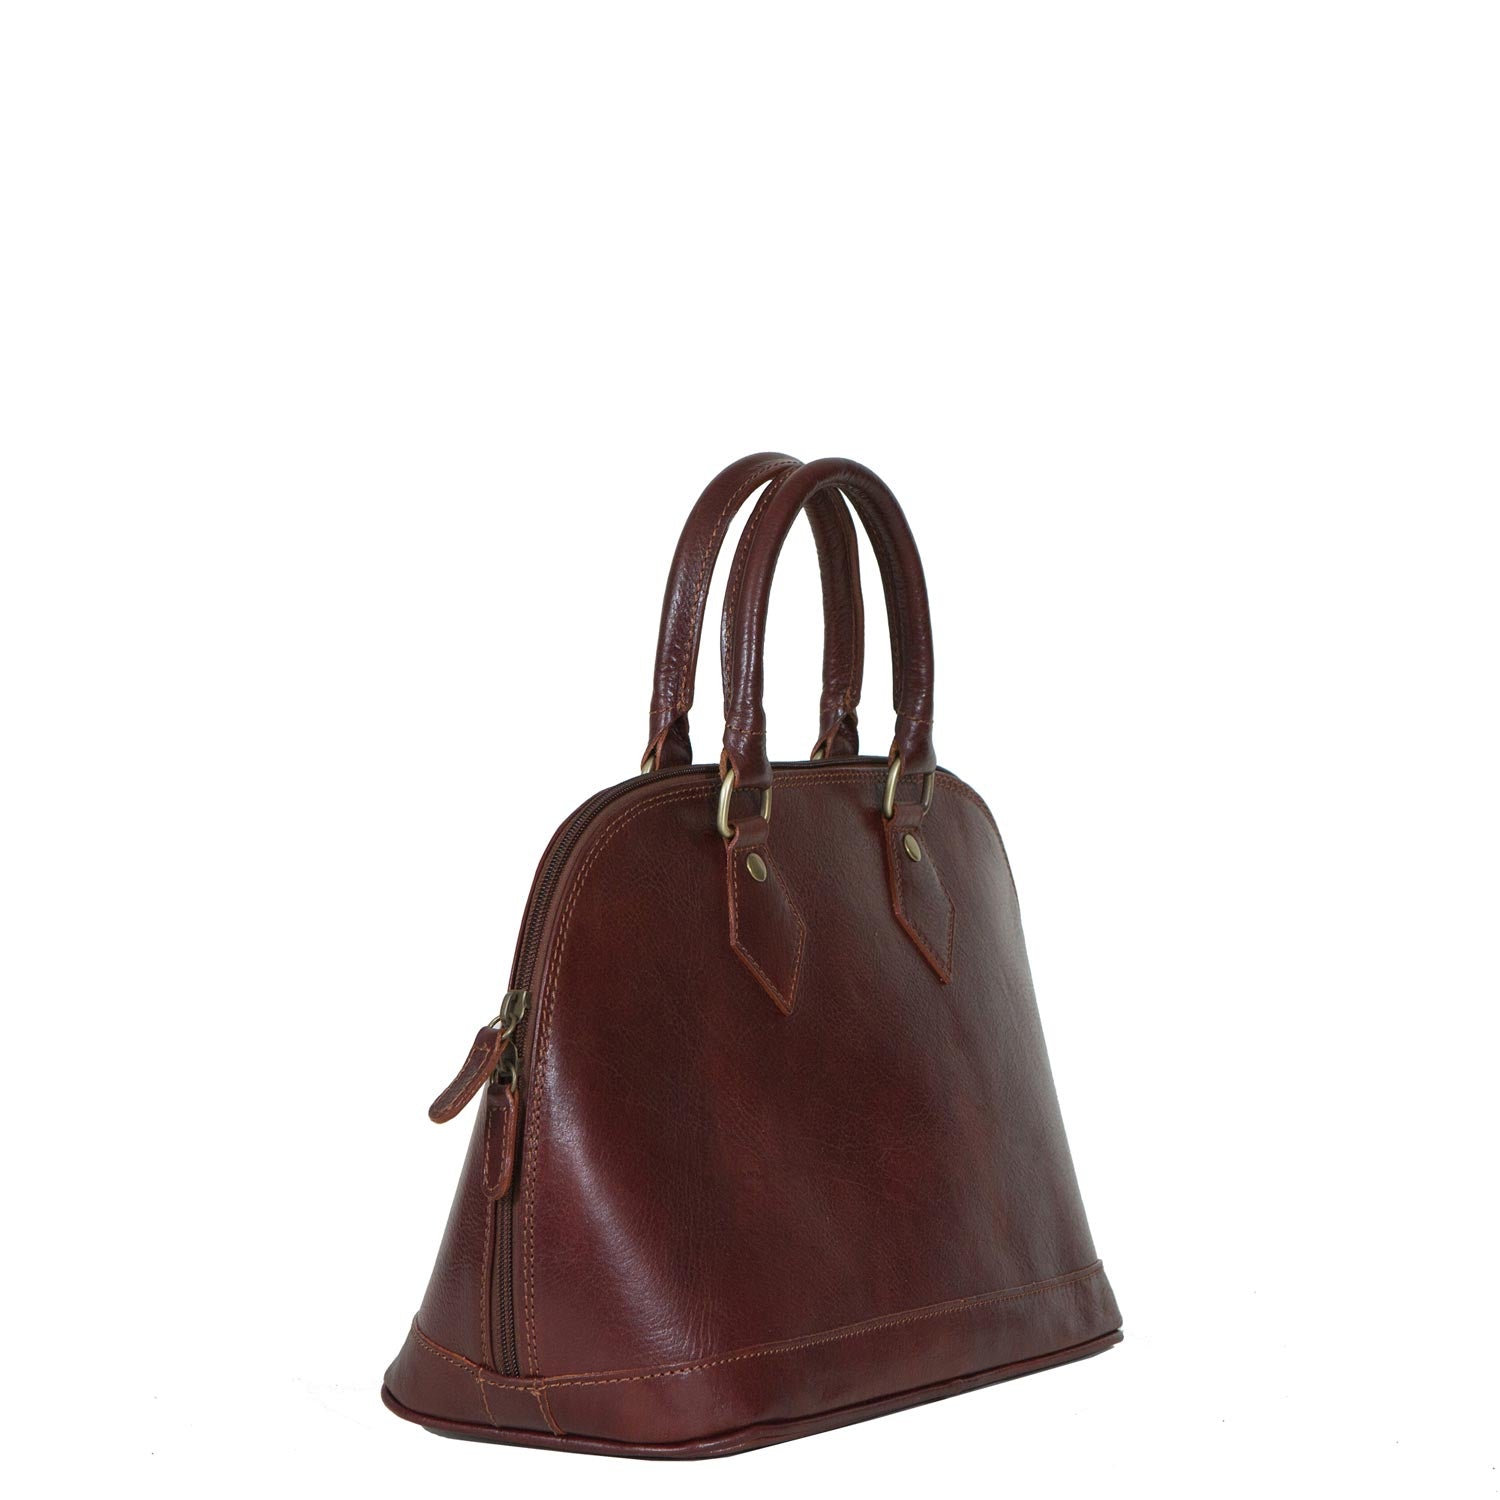 Shop Polène from Italy & Ship to Singapore! Luxury Leather Handbag